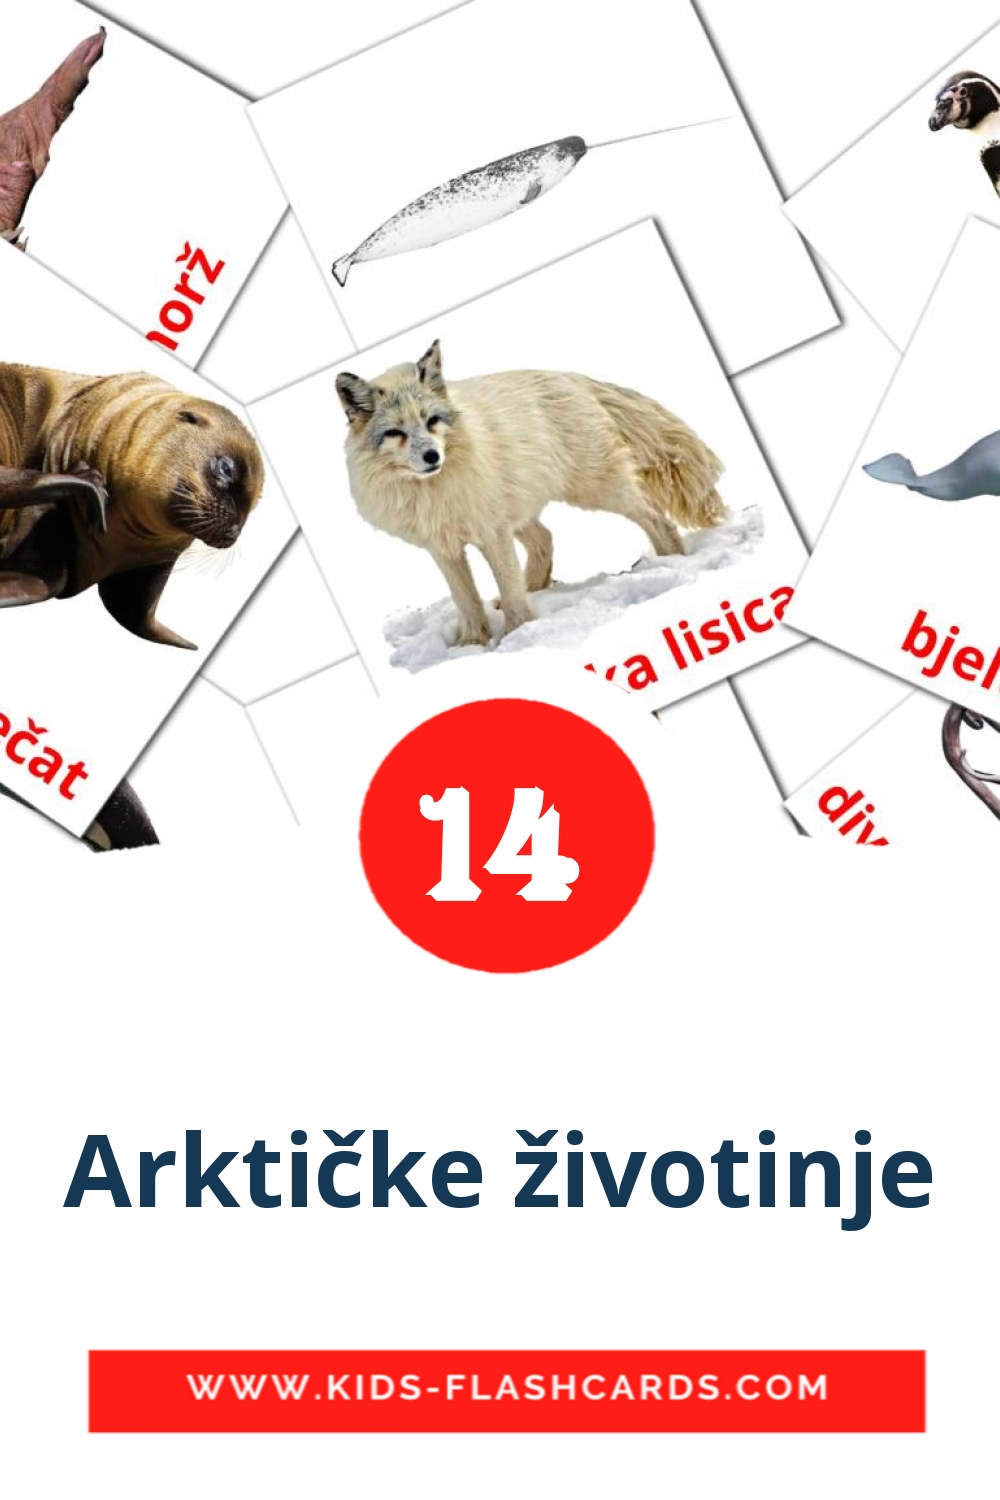 Arktičke životinje на хорватском для Детского Сада (14 карточек)